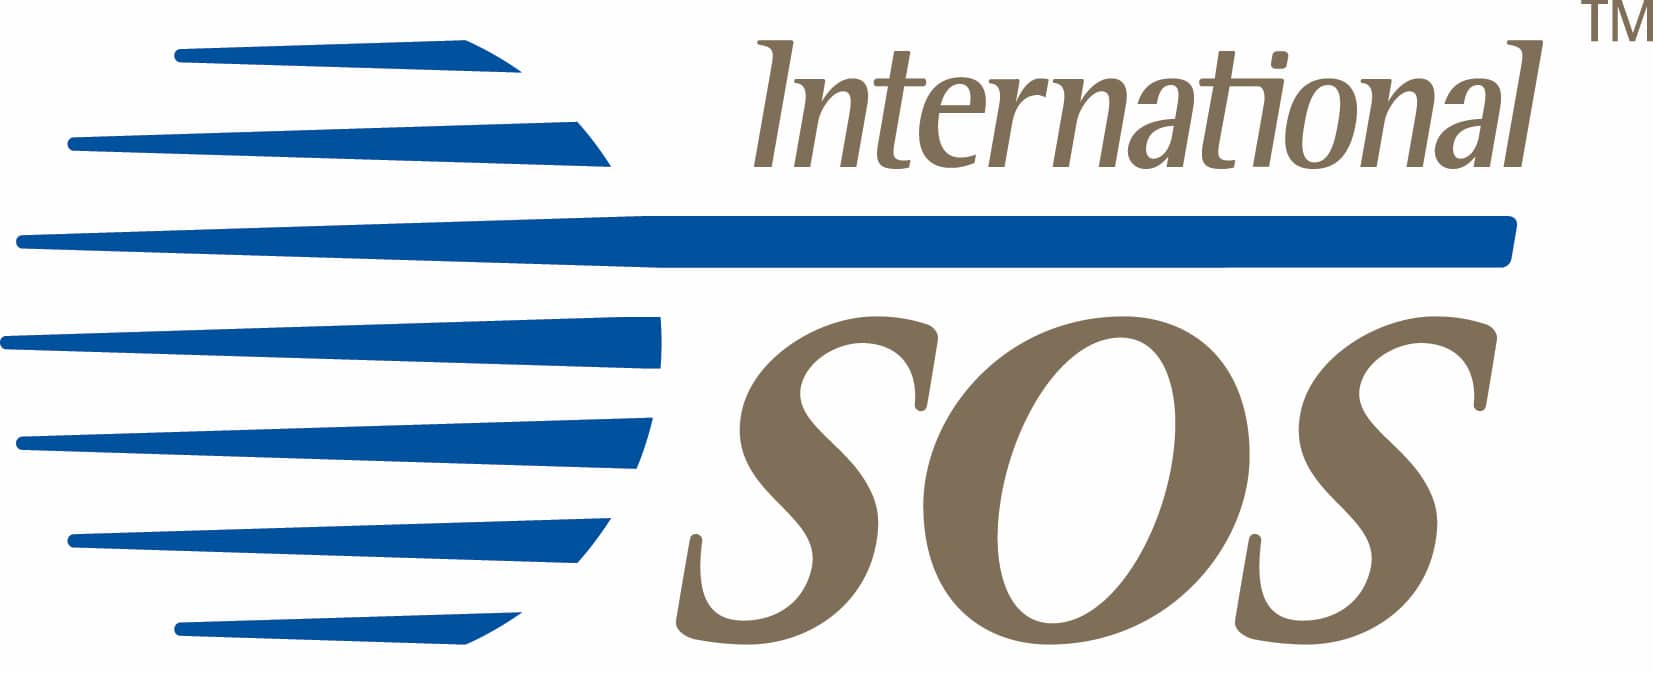 international sos travel insurance